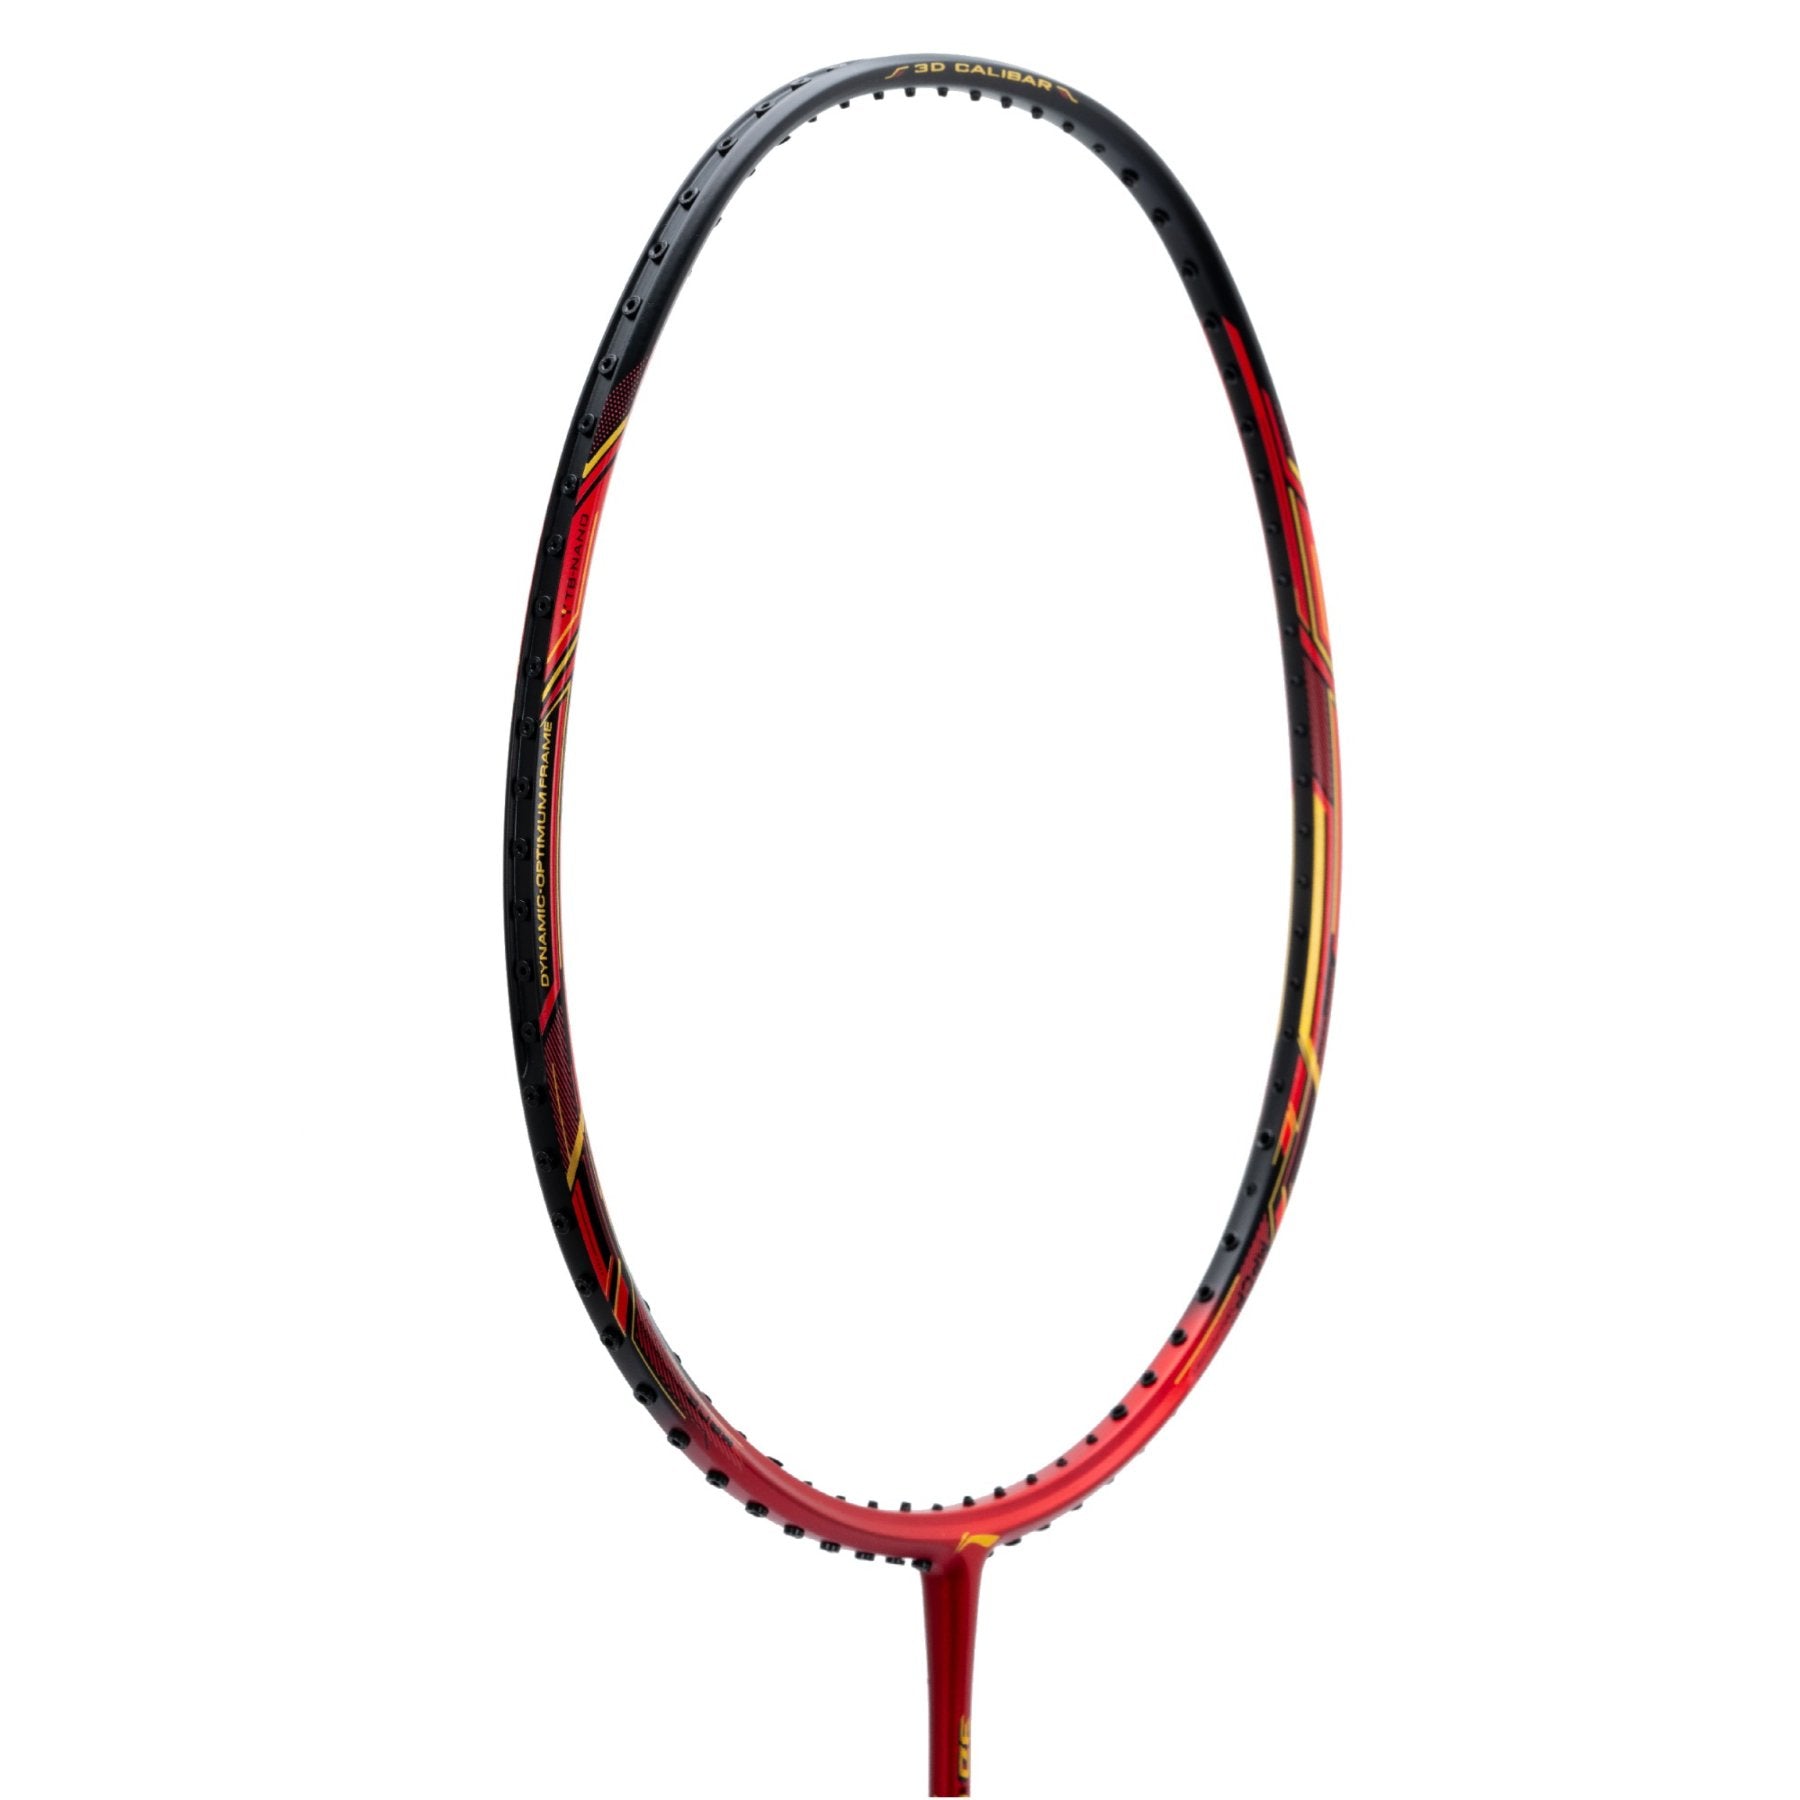 Li-Ning 3D Caliber X Boost UnStrung Badminton Racket (Red/Black)